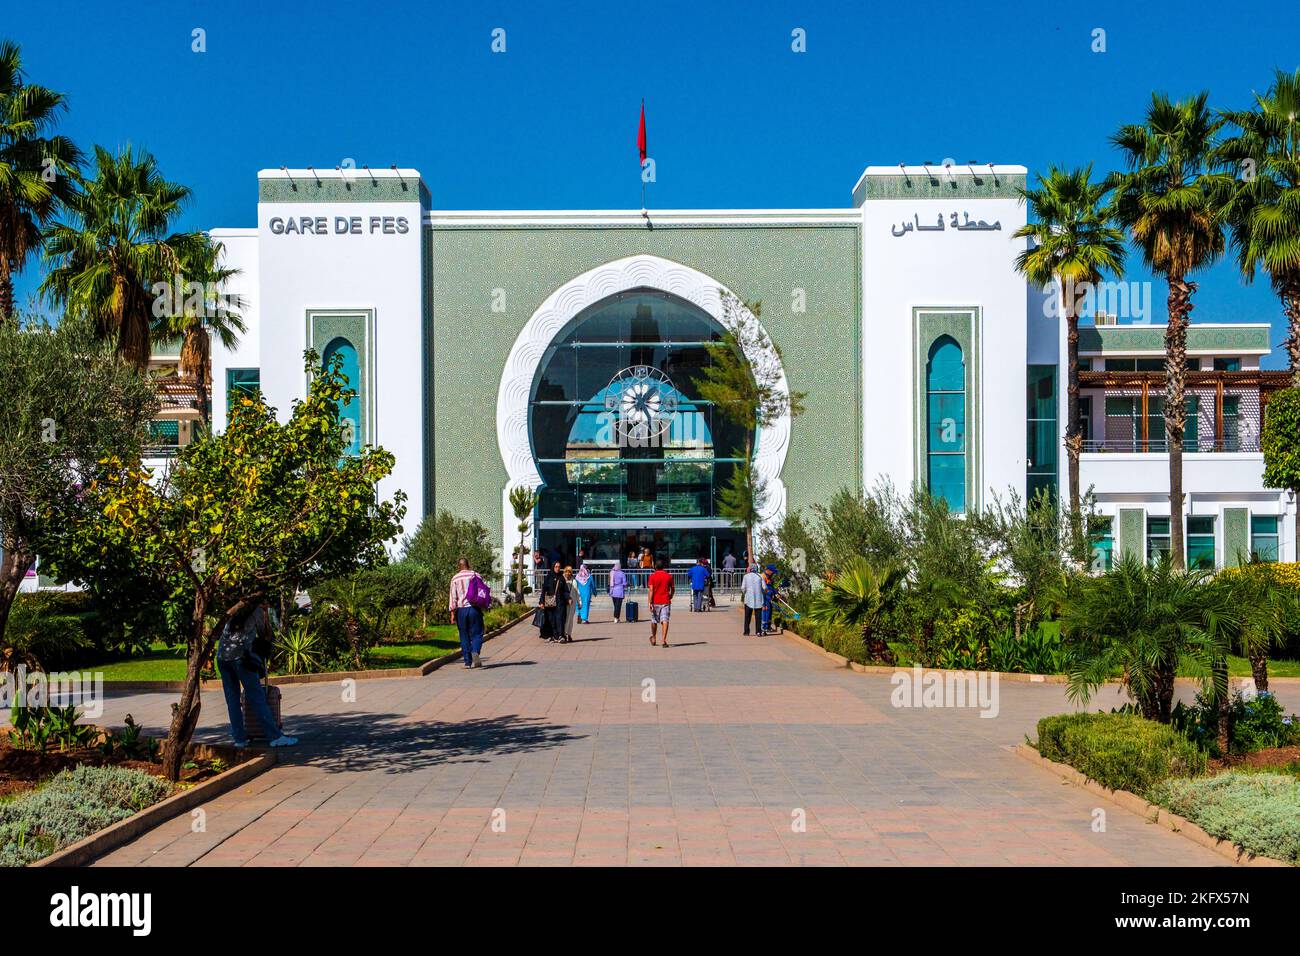 Rail travel in Morocco, Fez railway station Stock Photo